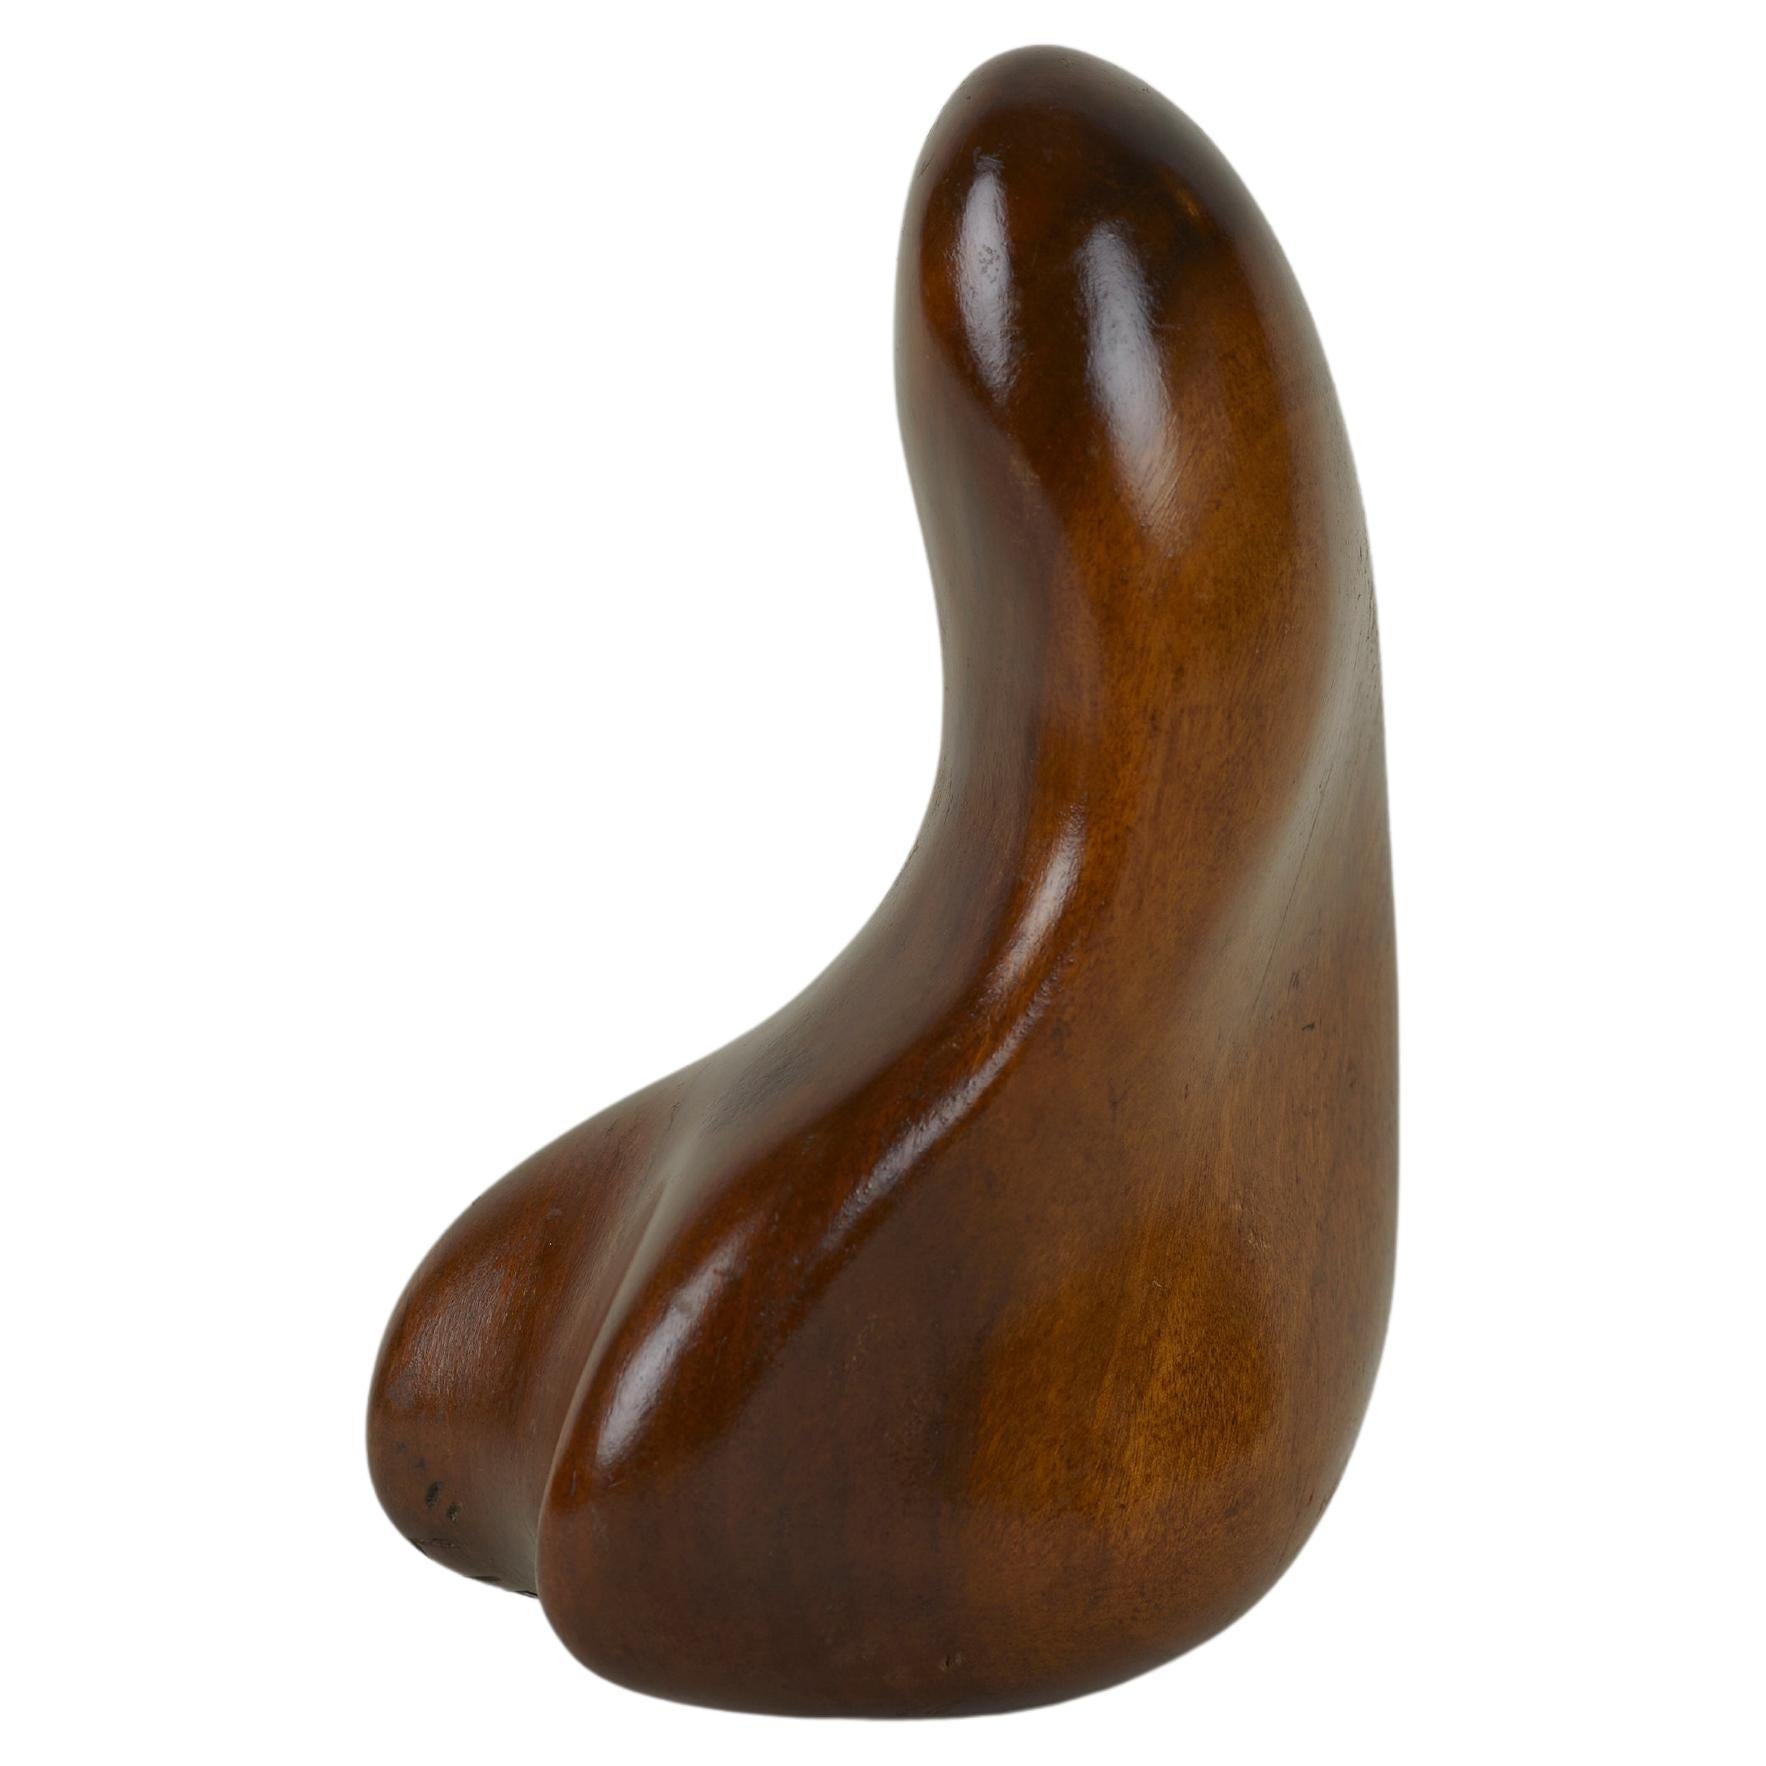 "LIEBE" [Love] 1976 signed wooden phallic erotica sculpture VITINO (1928-2006)